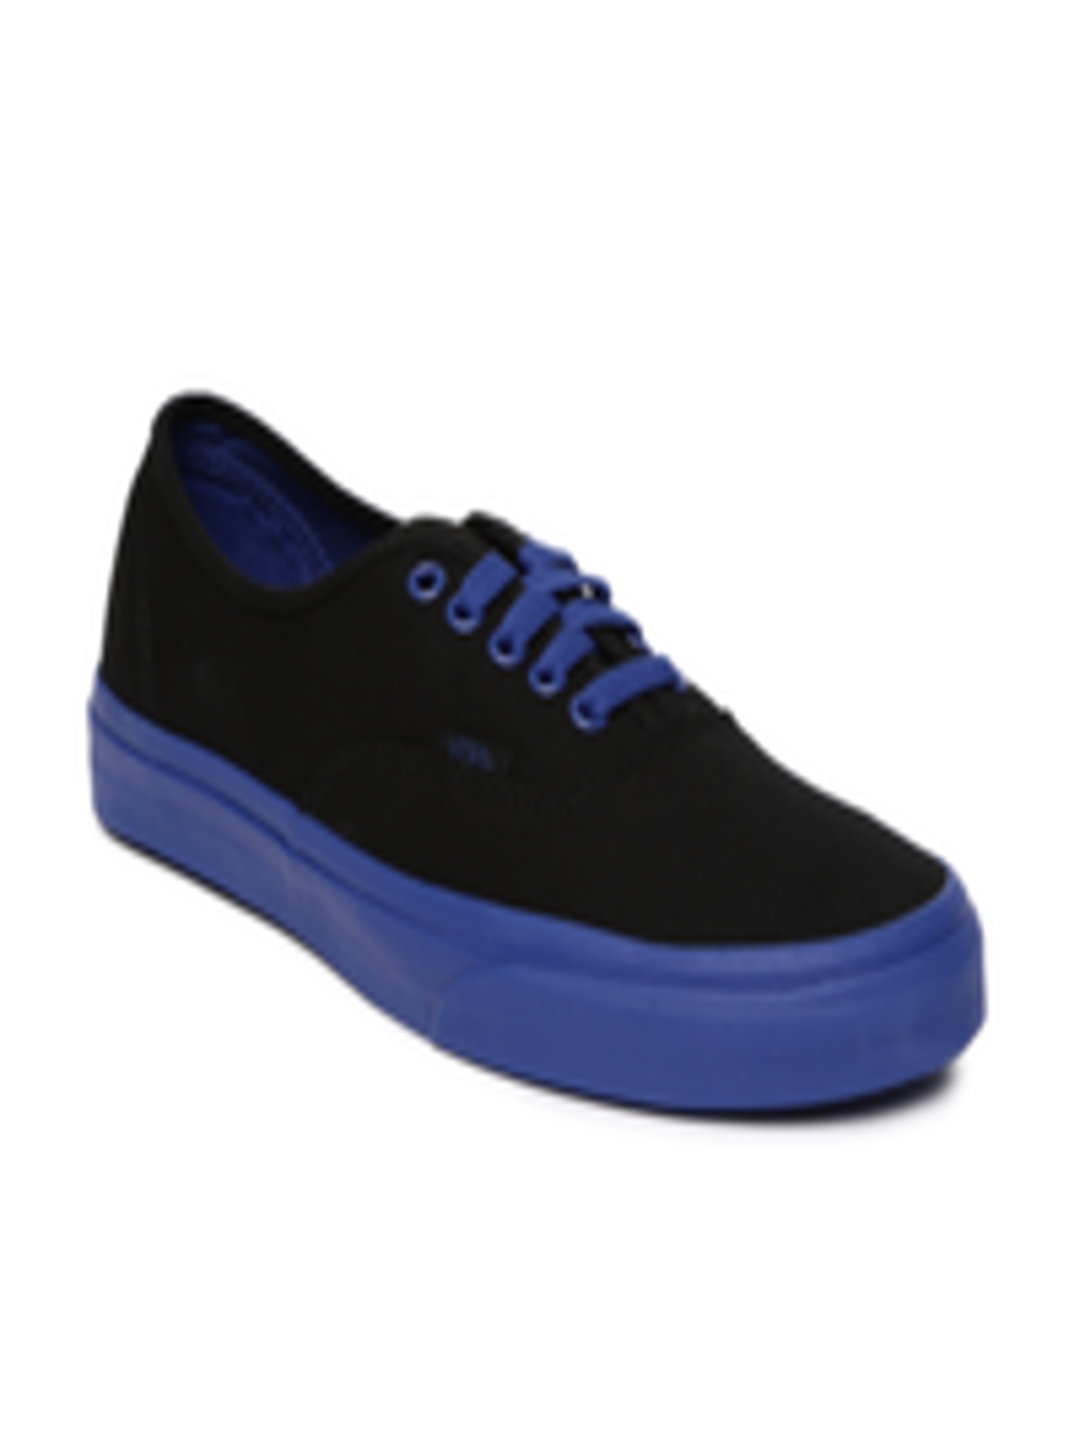 Buy Vans Unisex Black Sneakers - Casual Shoes for Unisex 1869918 | Myntra